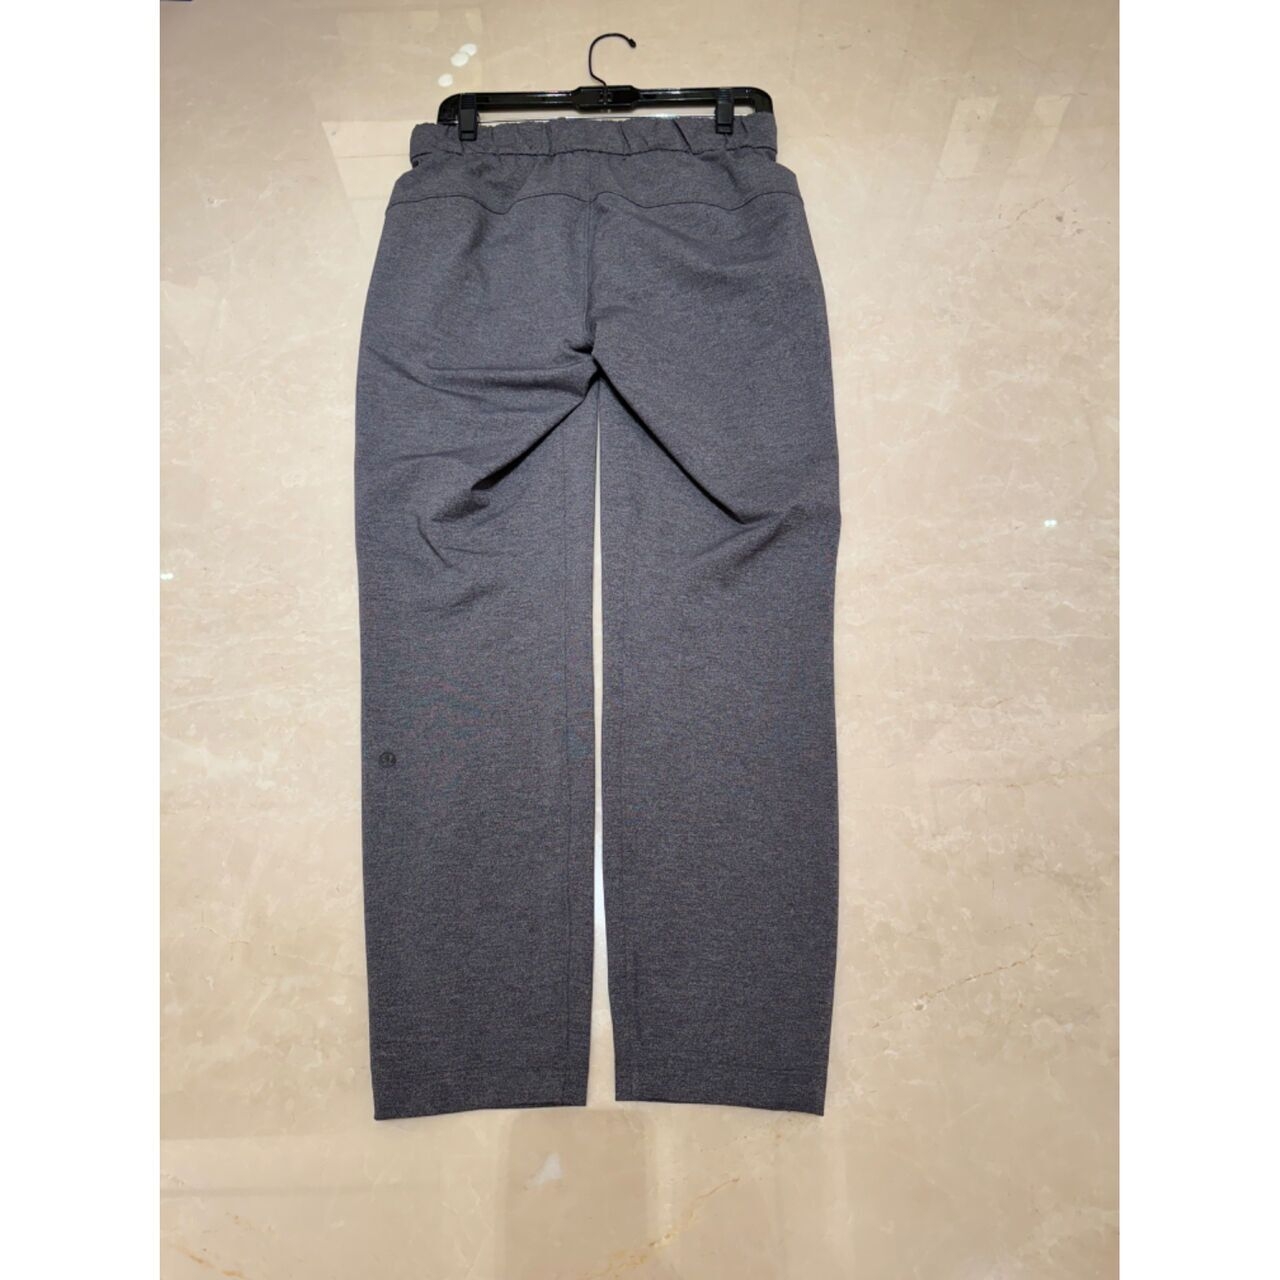 Lululemon Grey Long Pants